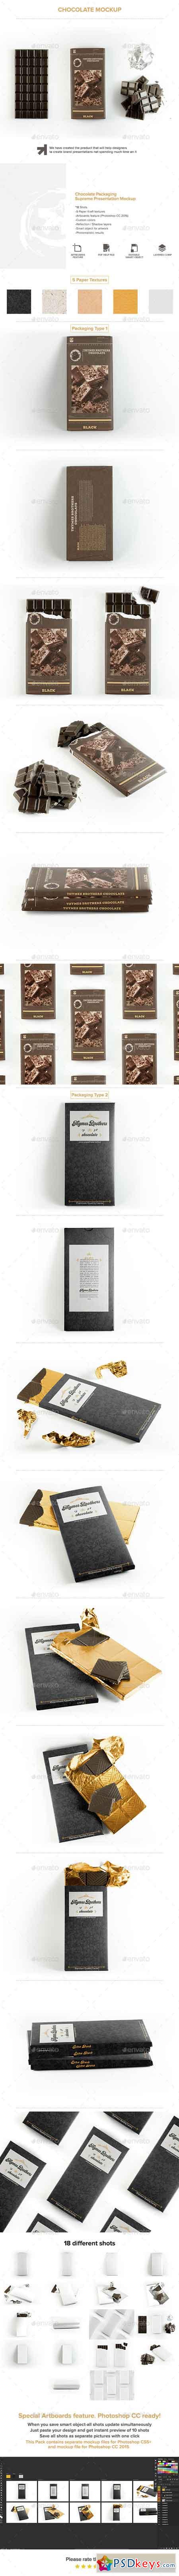 Chocolate Bar Packaging Mockup 15433917